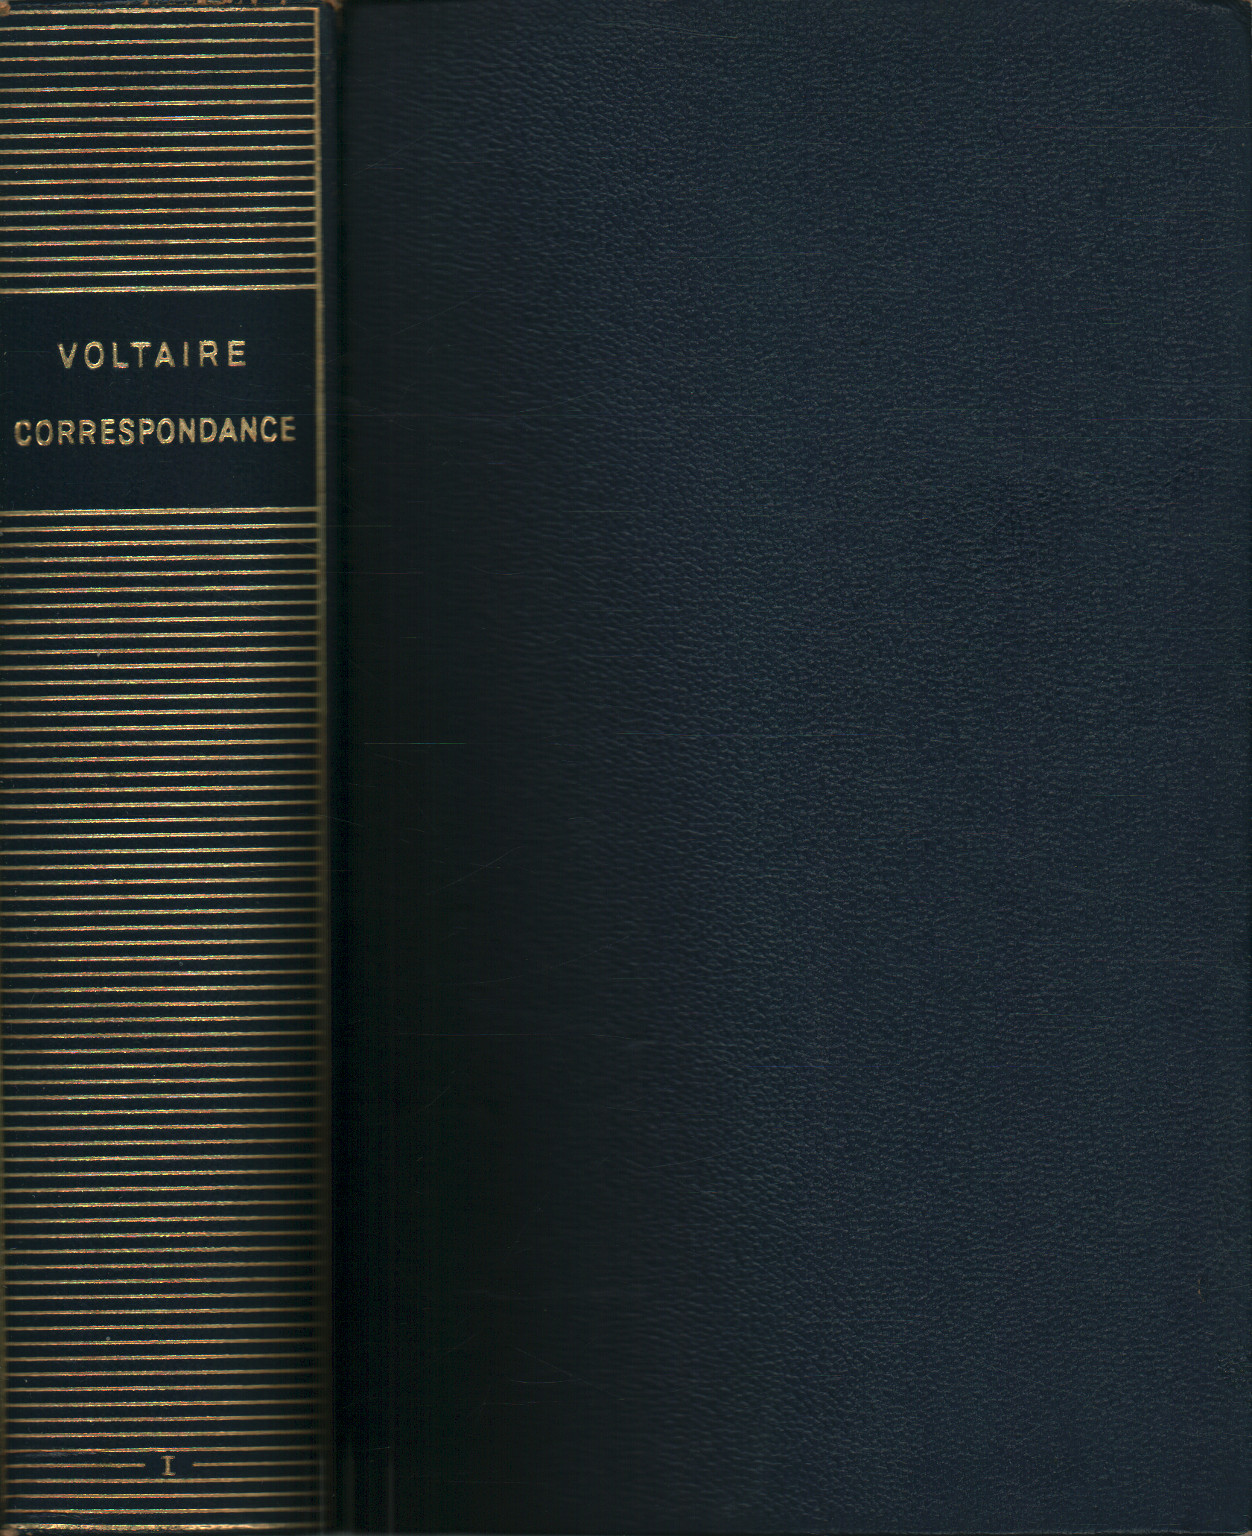 Correspondence de Voltaire (volumen I), s.a.